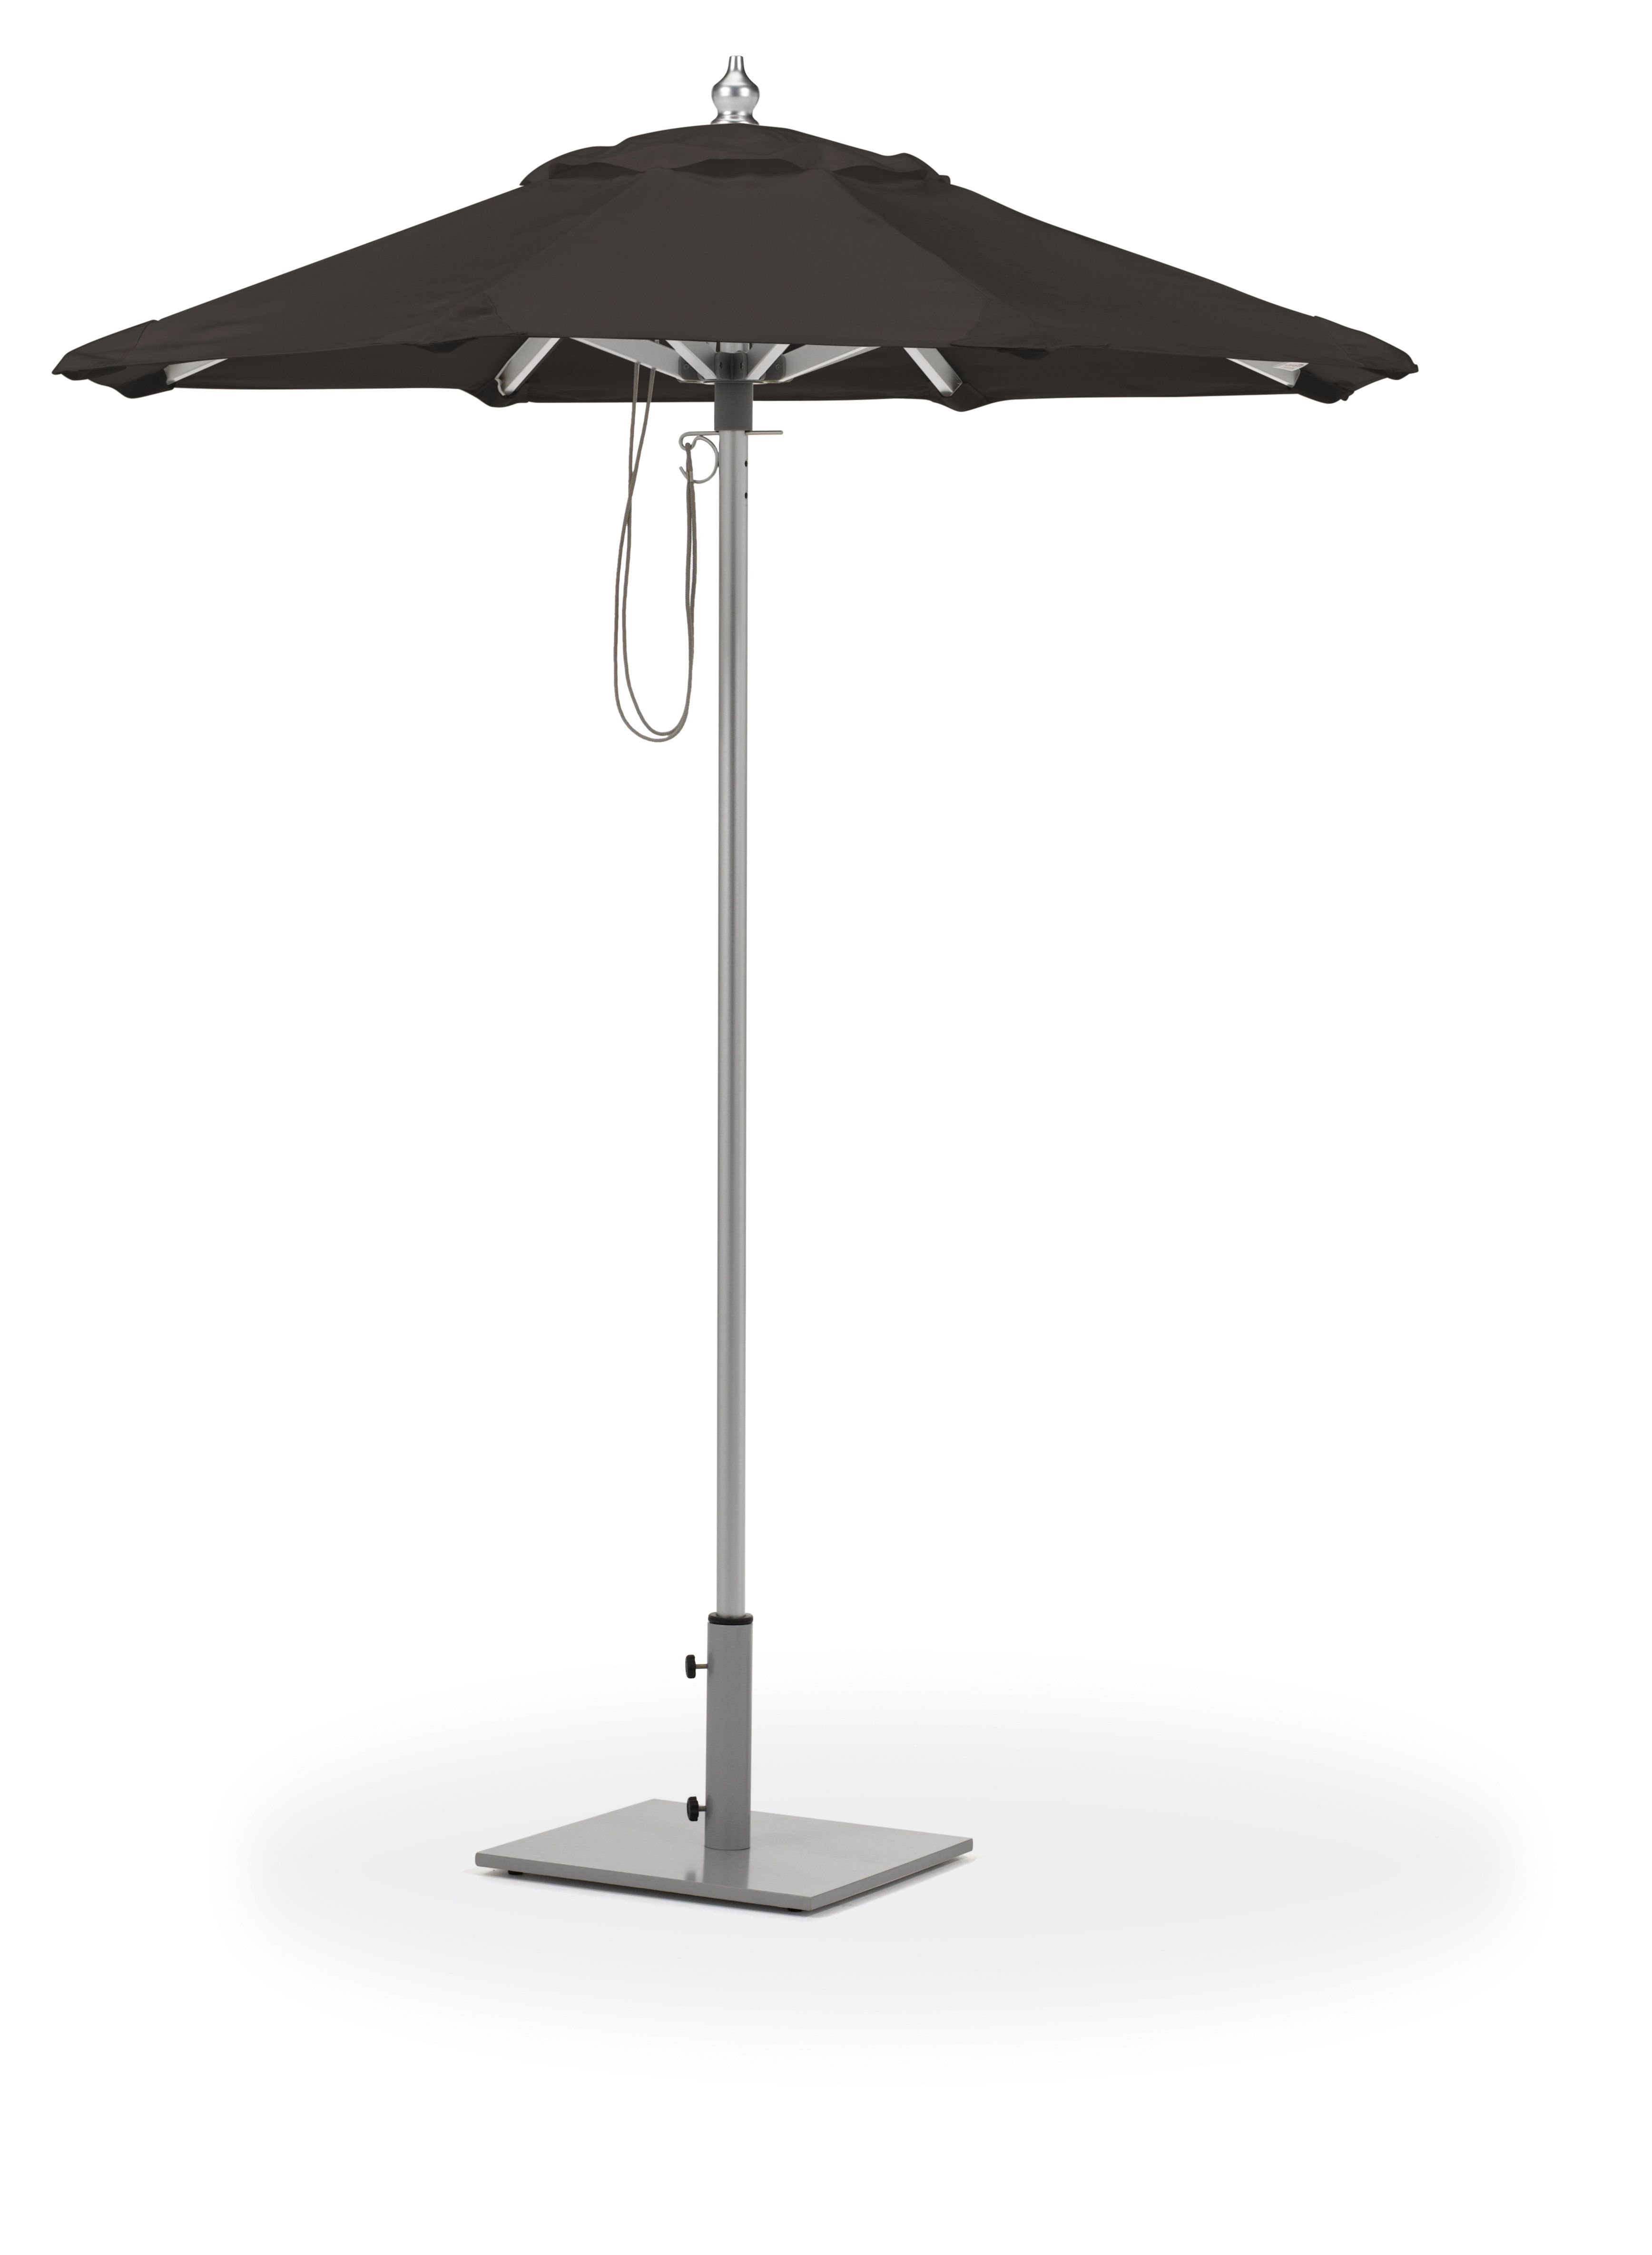 Most Popular Stambaugh 6' Market Umbrella Intended For Caravelle Market Sunbrella Umbrellas (View 20 of 20)